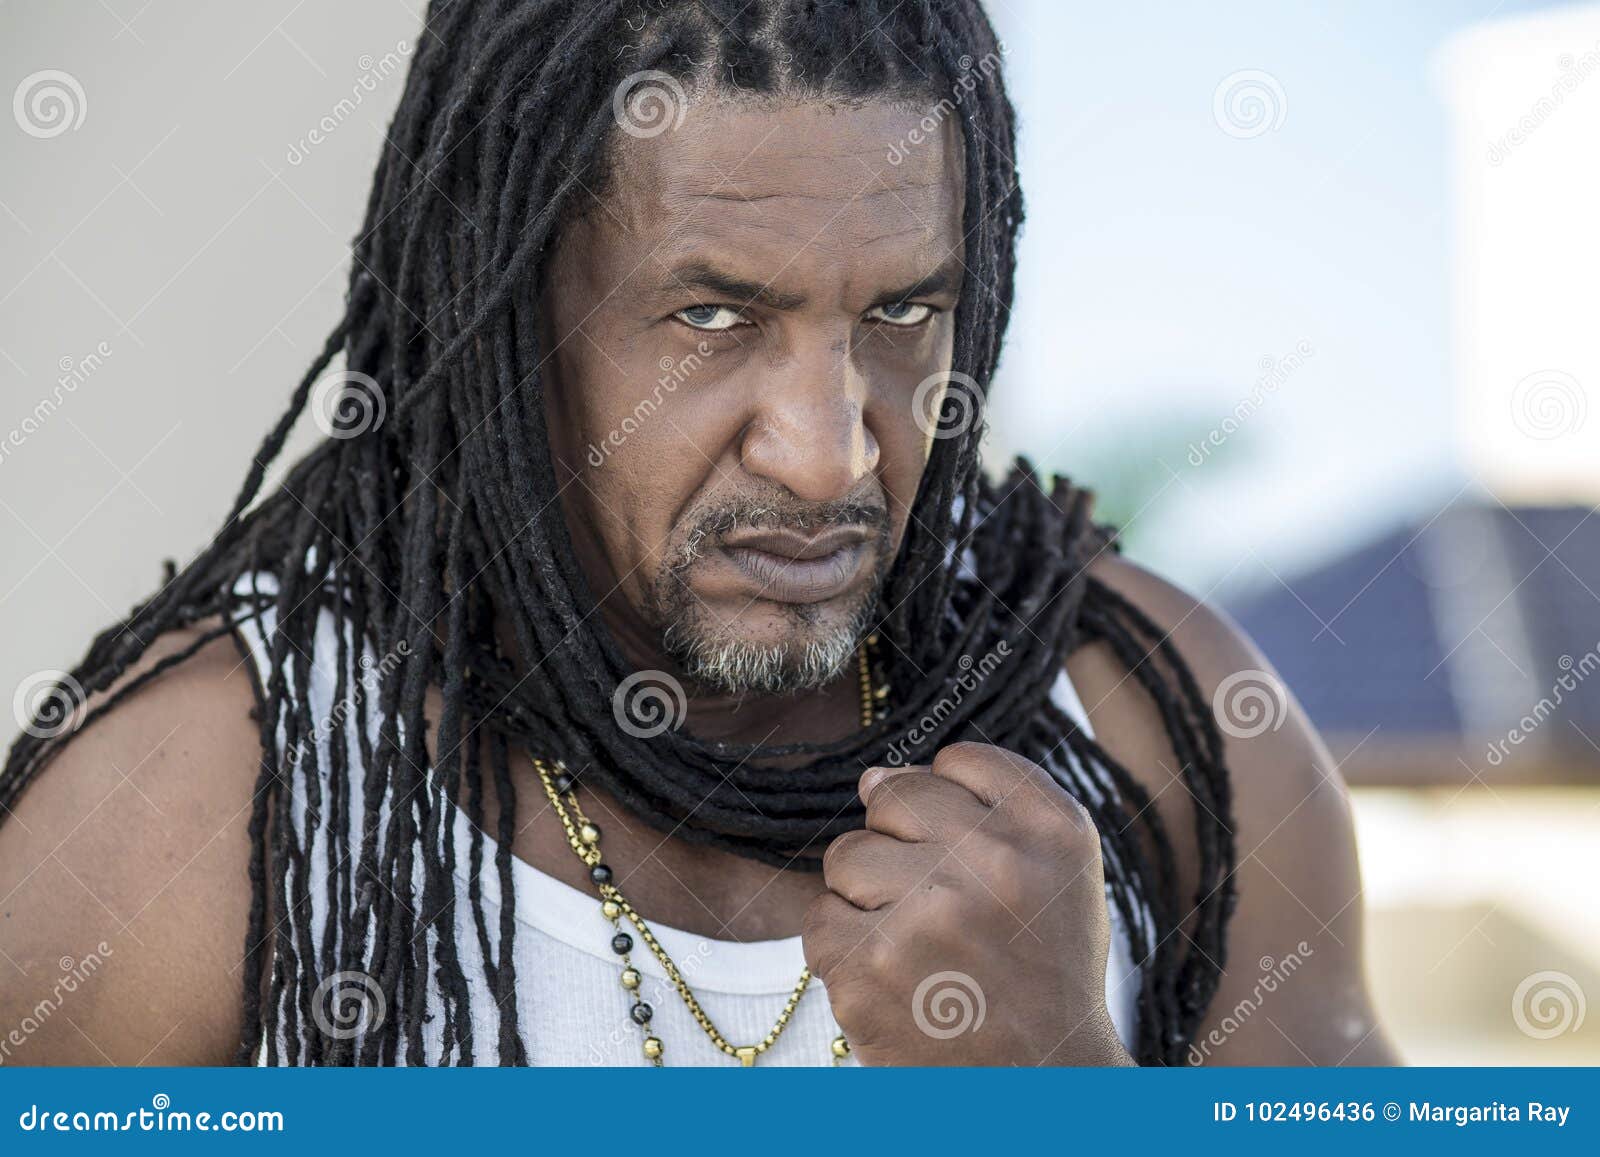 Adult Porn Black Male Dreadlocks - Portrait of Adult Strong Black Men with Long Dreadlocks and Blue Eyes.  Stock Photo - Image of jock, blue: 102496436